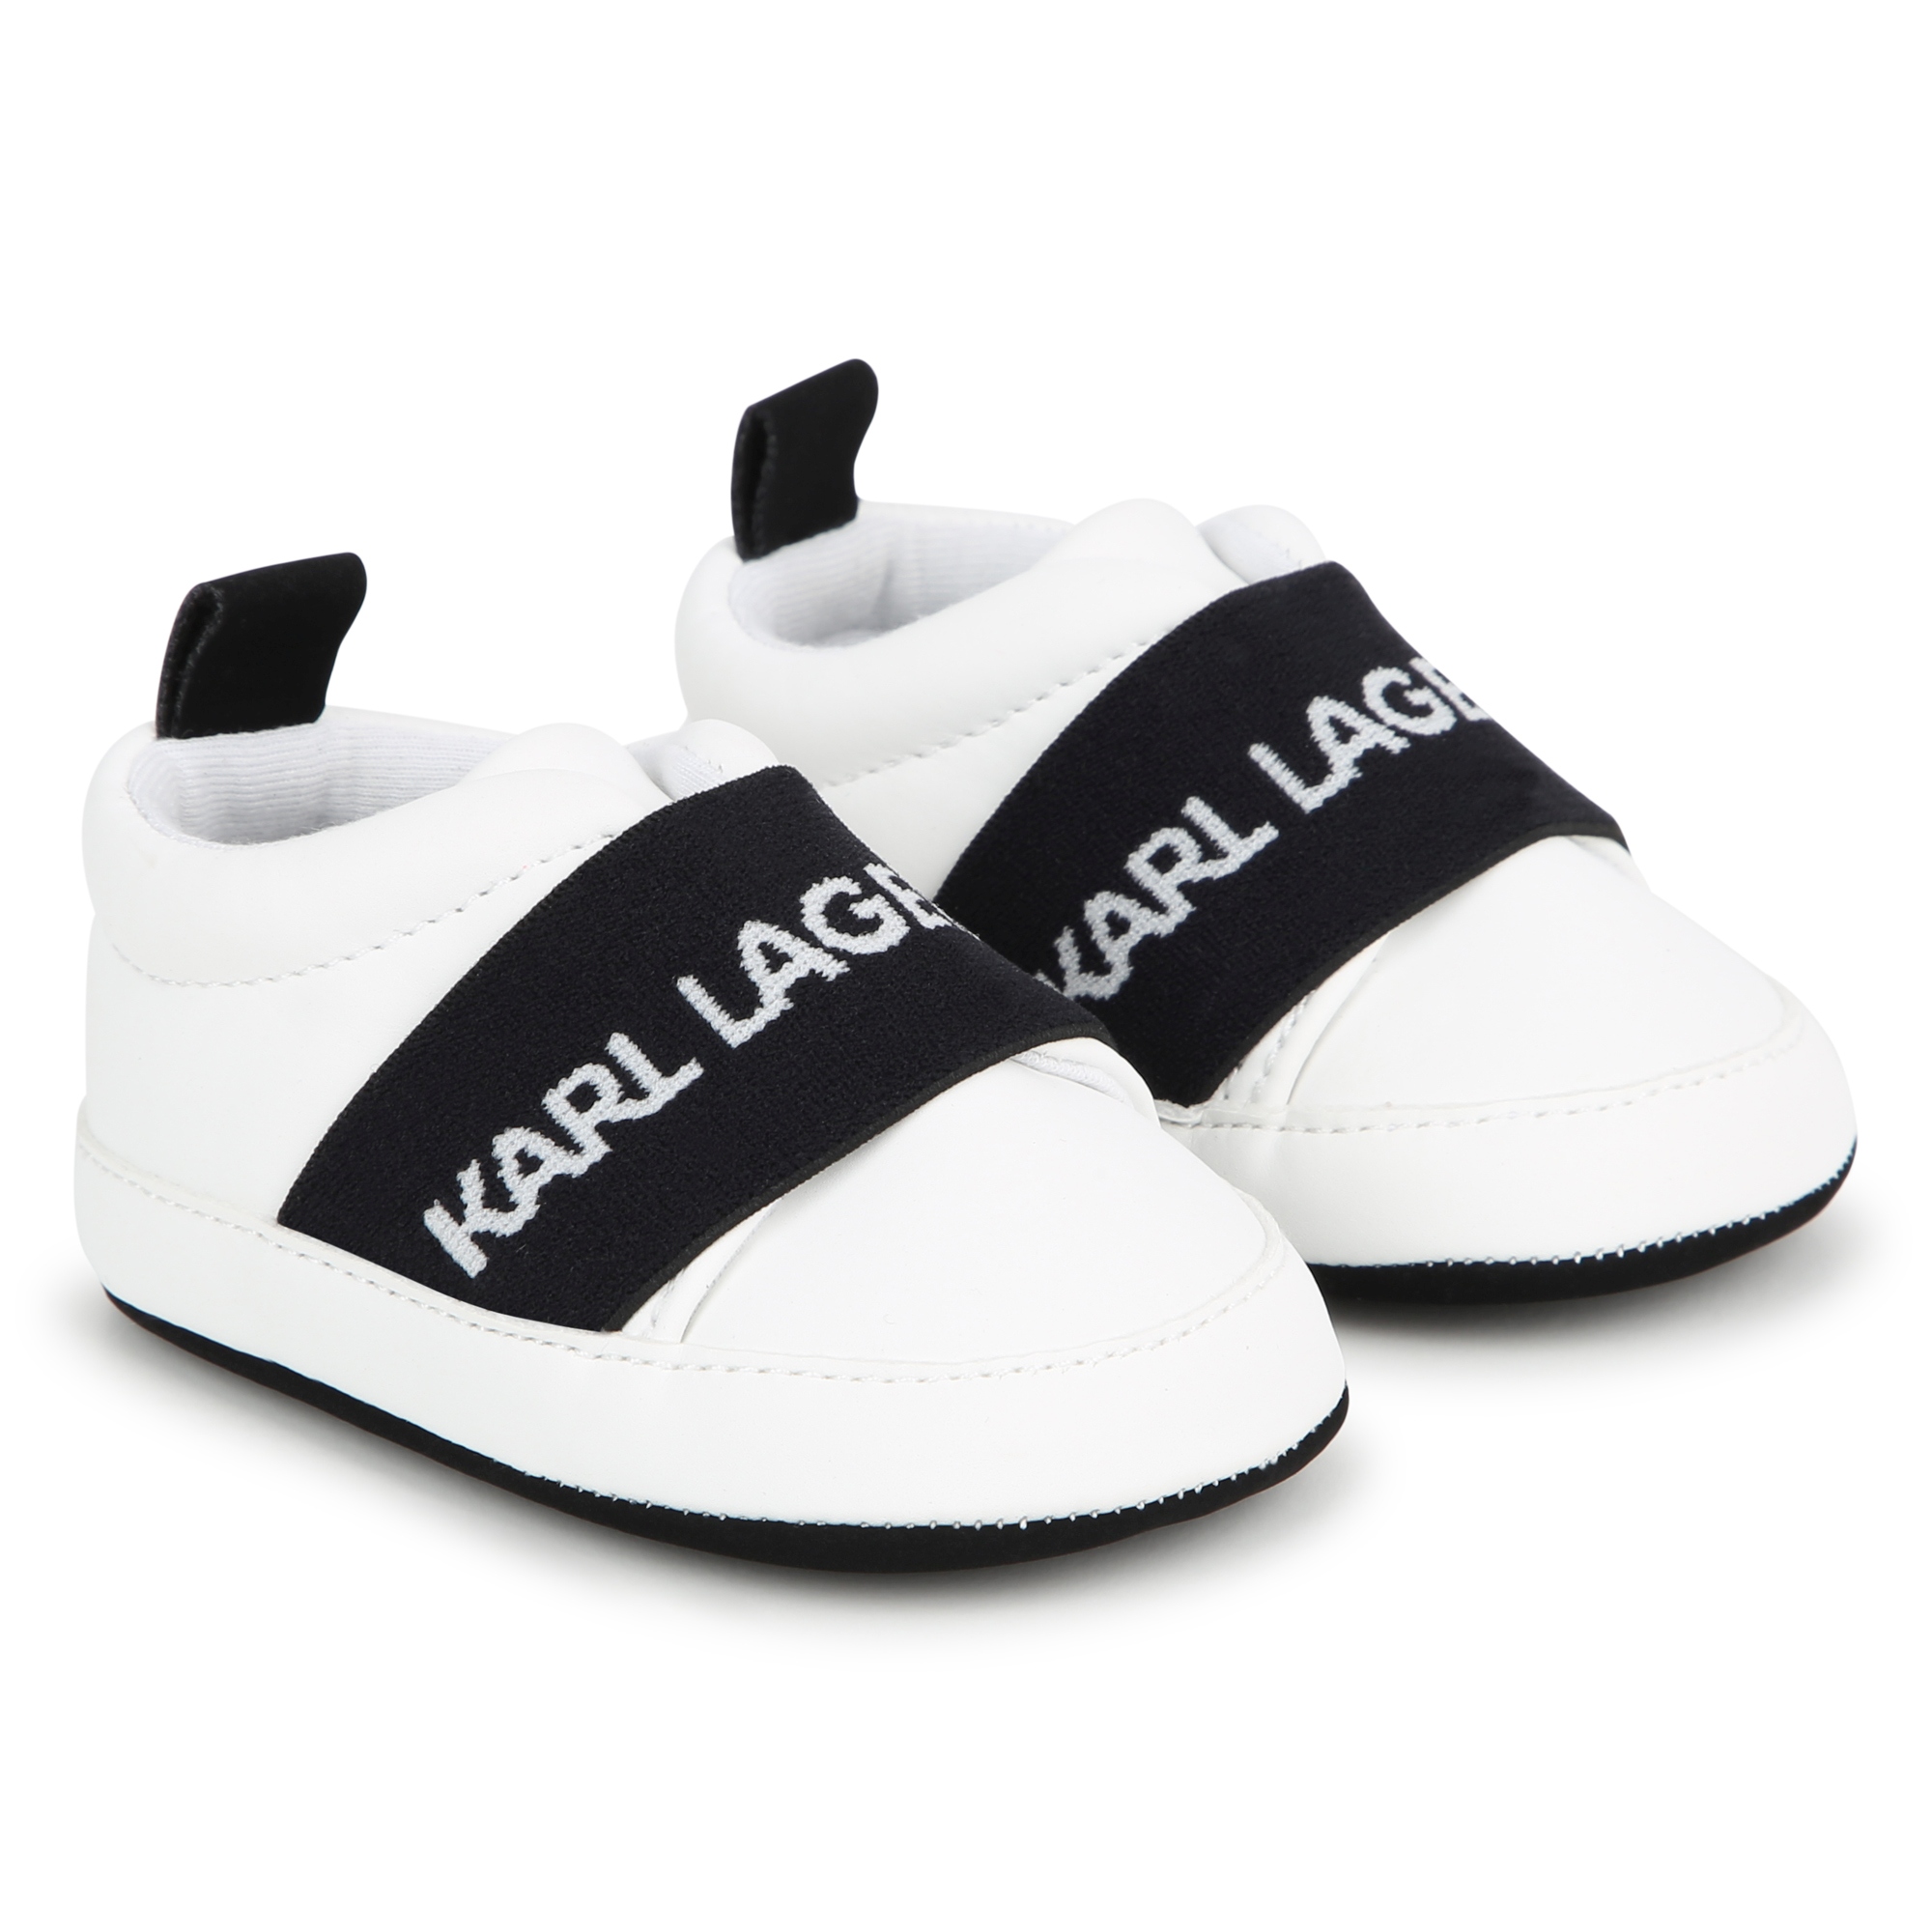 Decorative slippers KARL LAGERFELD KIDS for UNISEX